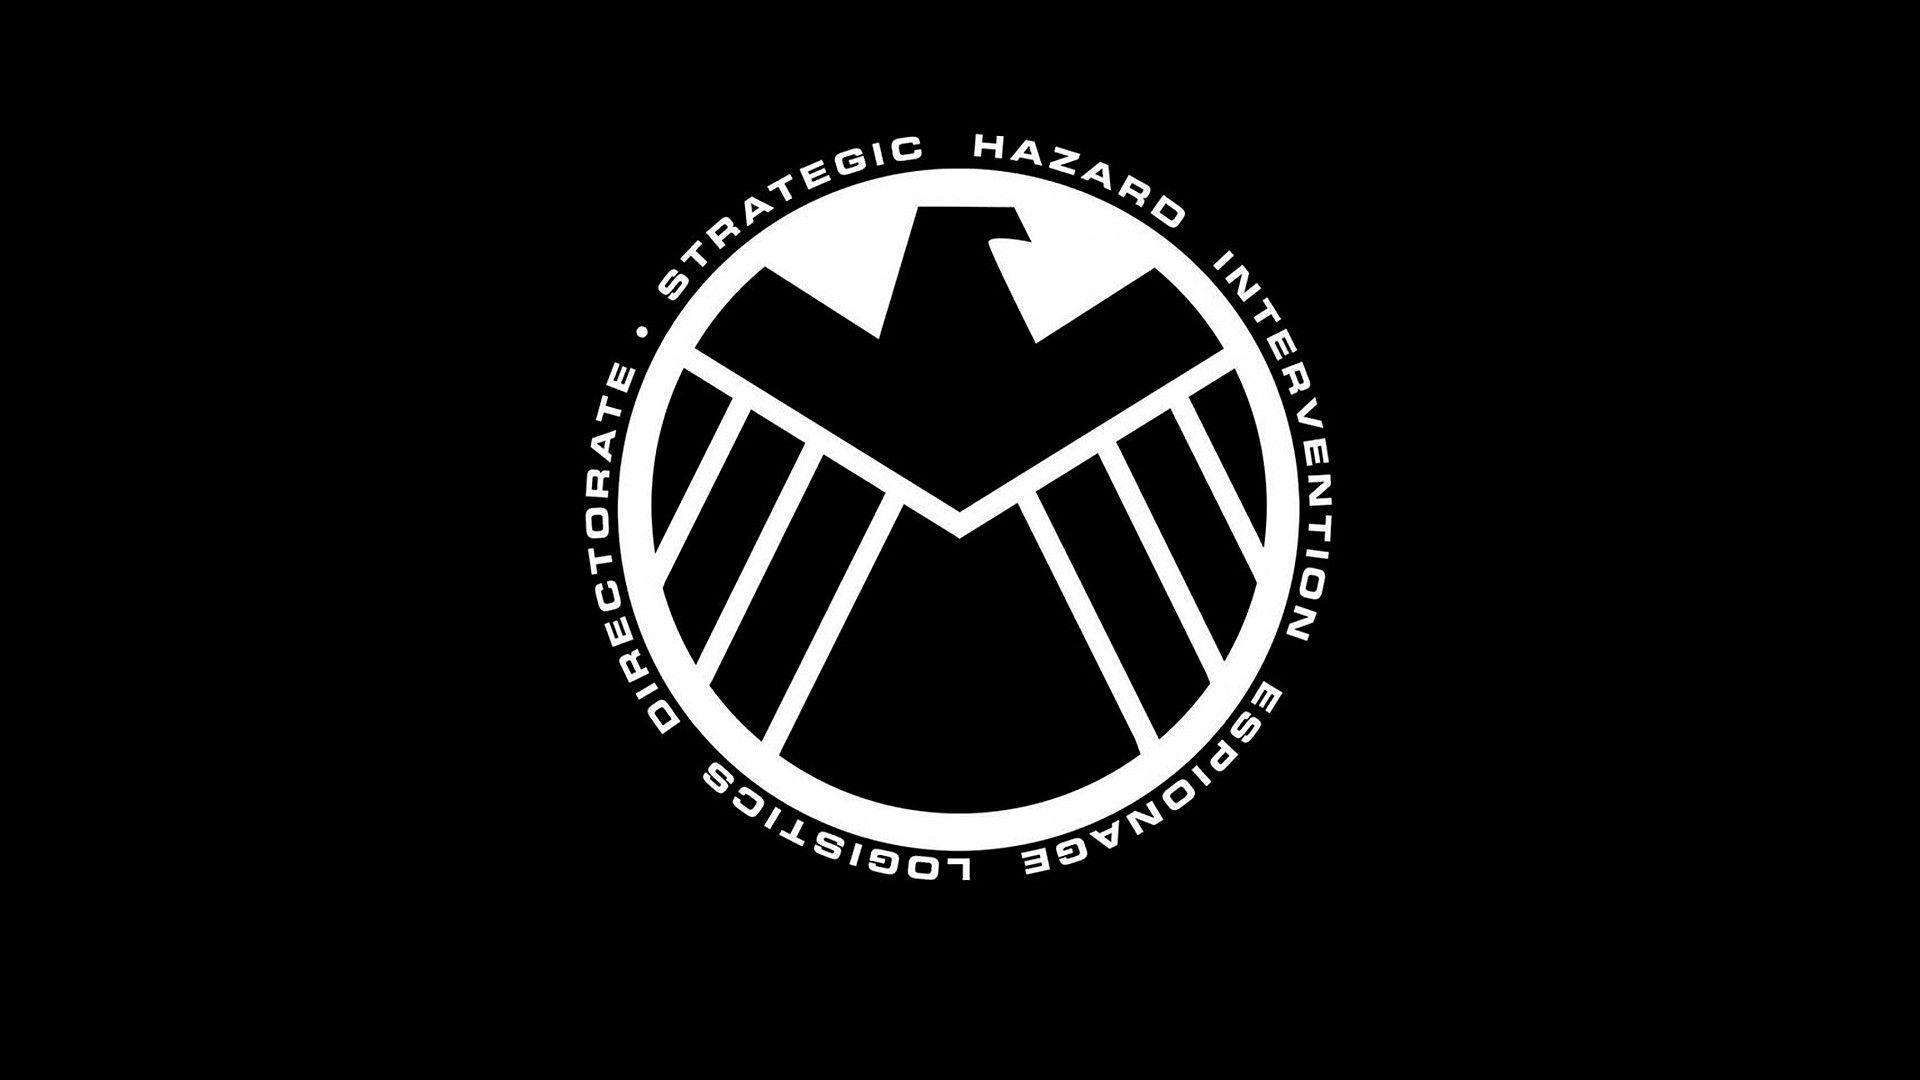 black and white, Marvel Comics, logos, fan art, agency, S.H.I.E.L.D